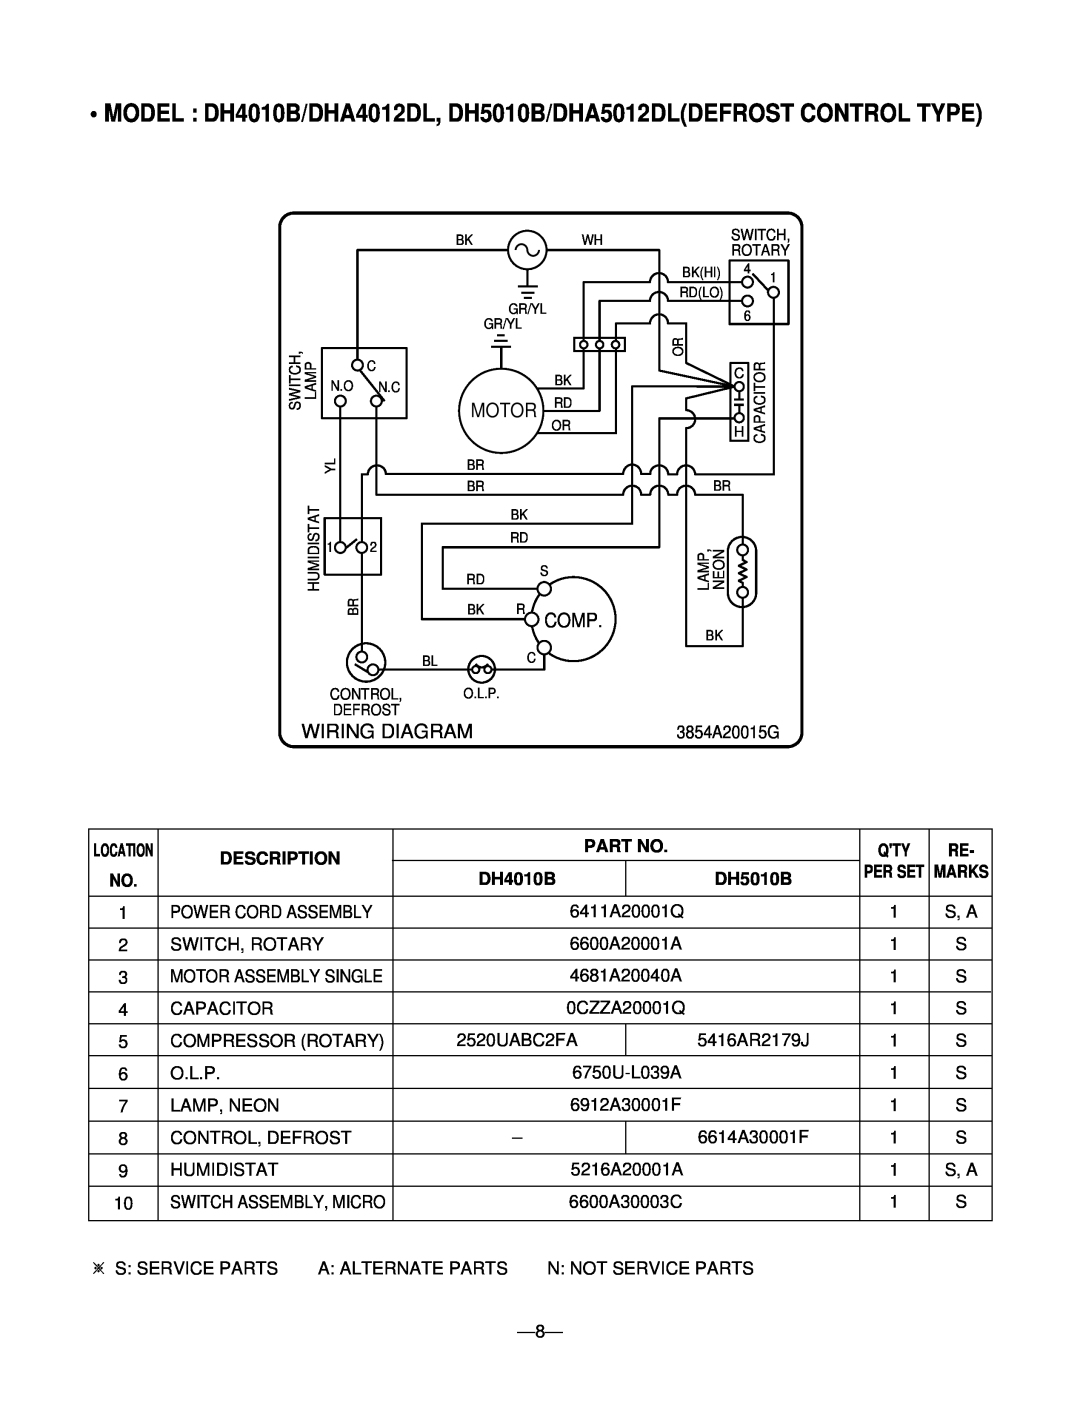 Goldstar DHA3012DL, DHA4012DL, DHA5012DL, DH5010B, DH3010B Motor, Location, Per Set, Marks, Wiring Diagram, Description 